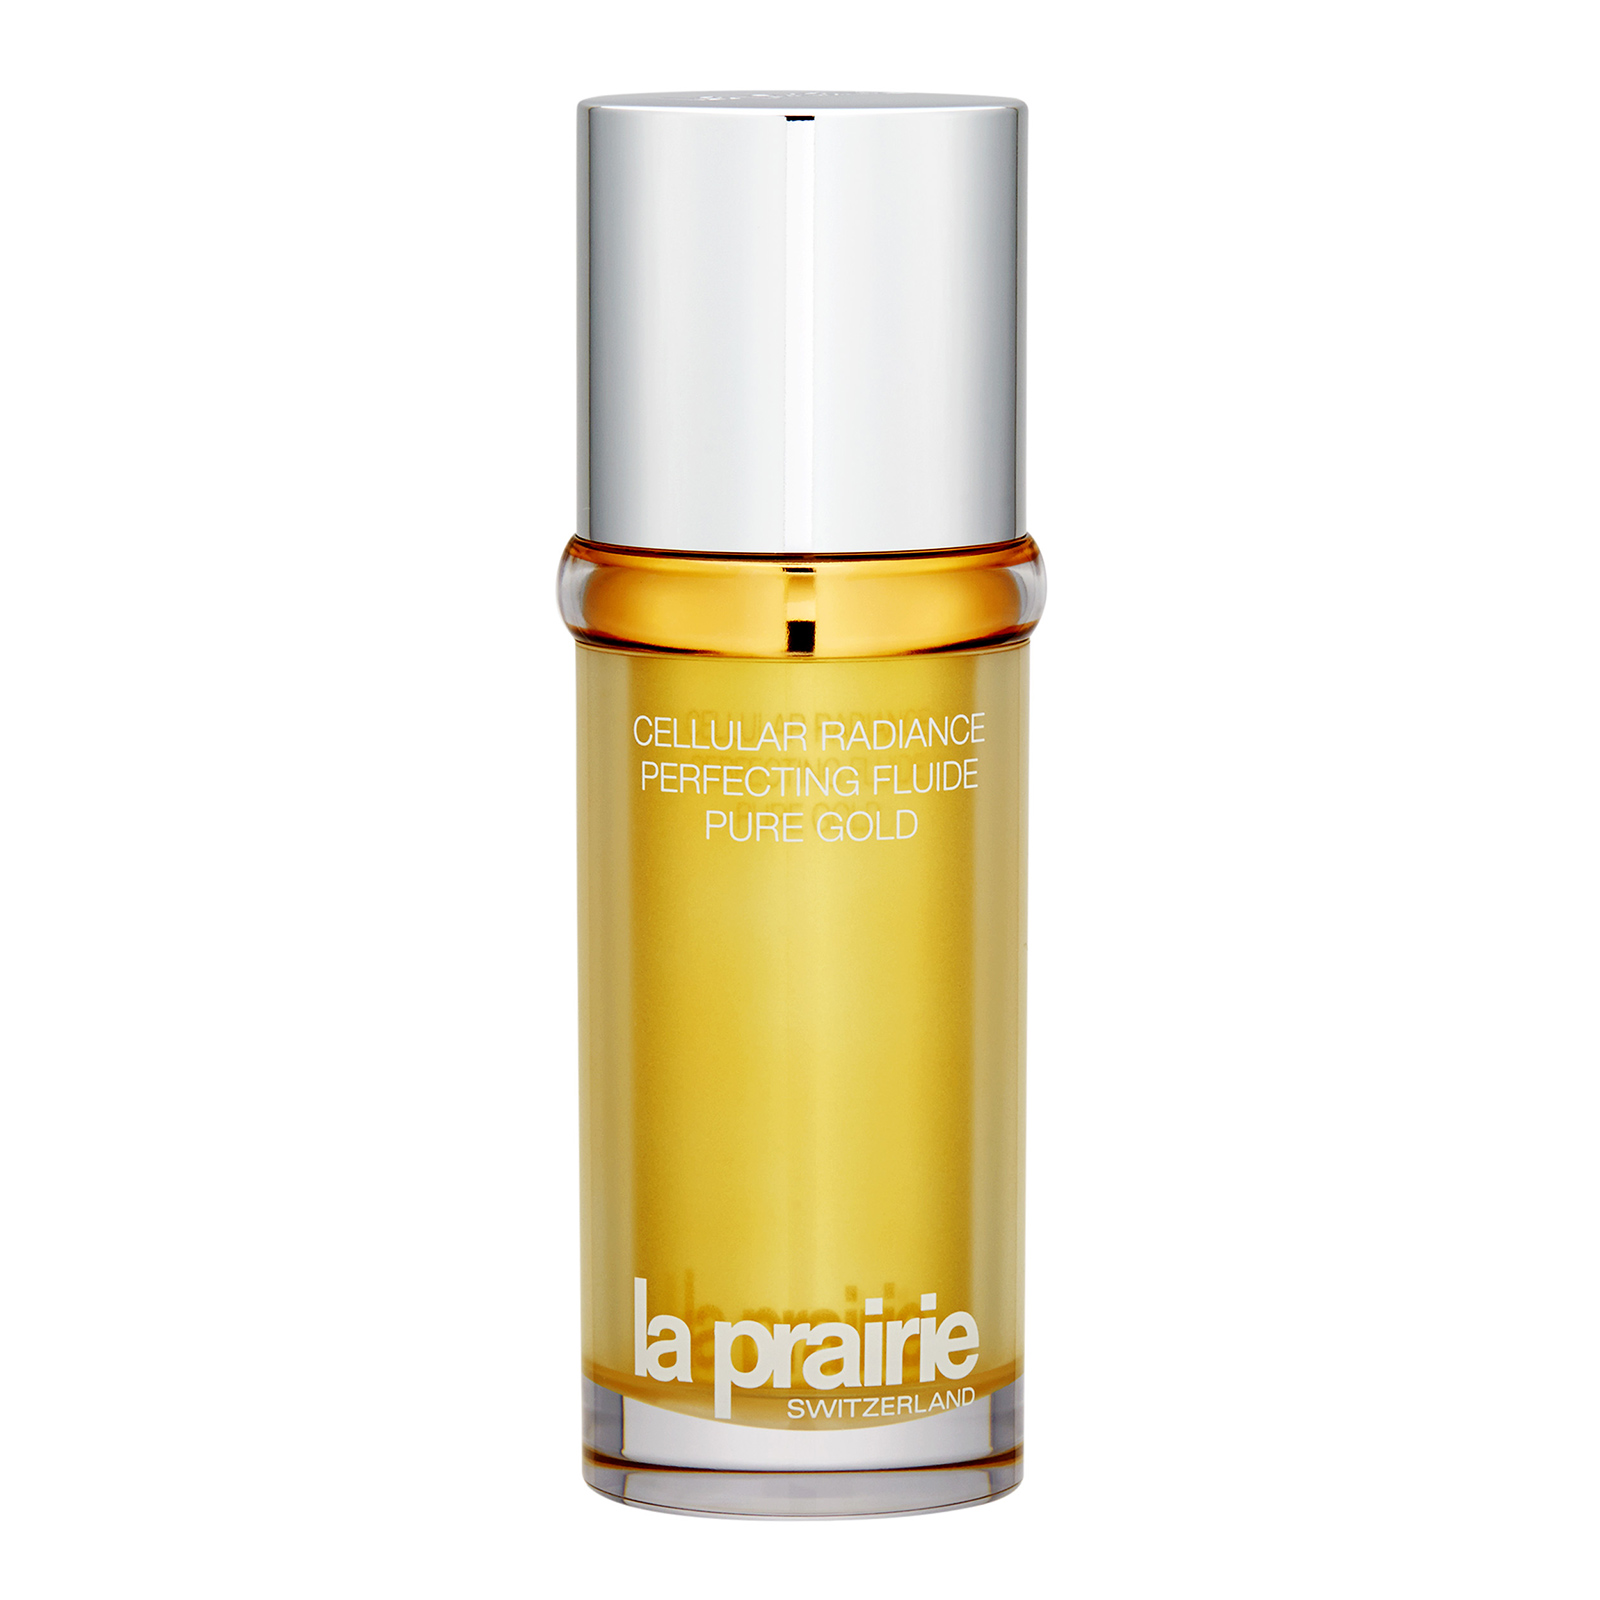 $329.00 ($525.00, 37% off) La Prairie Cellular Radiance Perfecting Fluide Pure Gold @ COSME-DE.COM